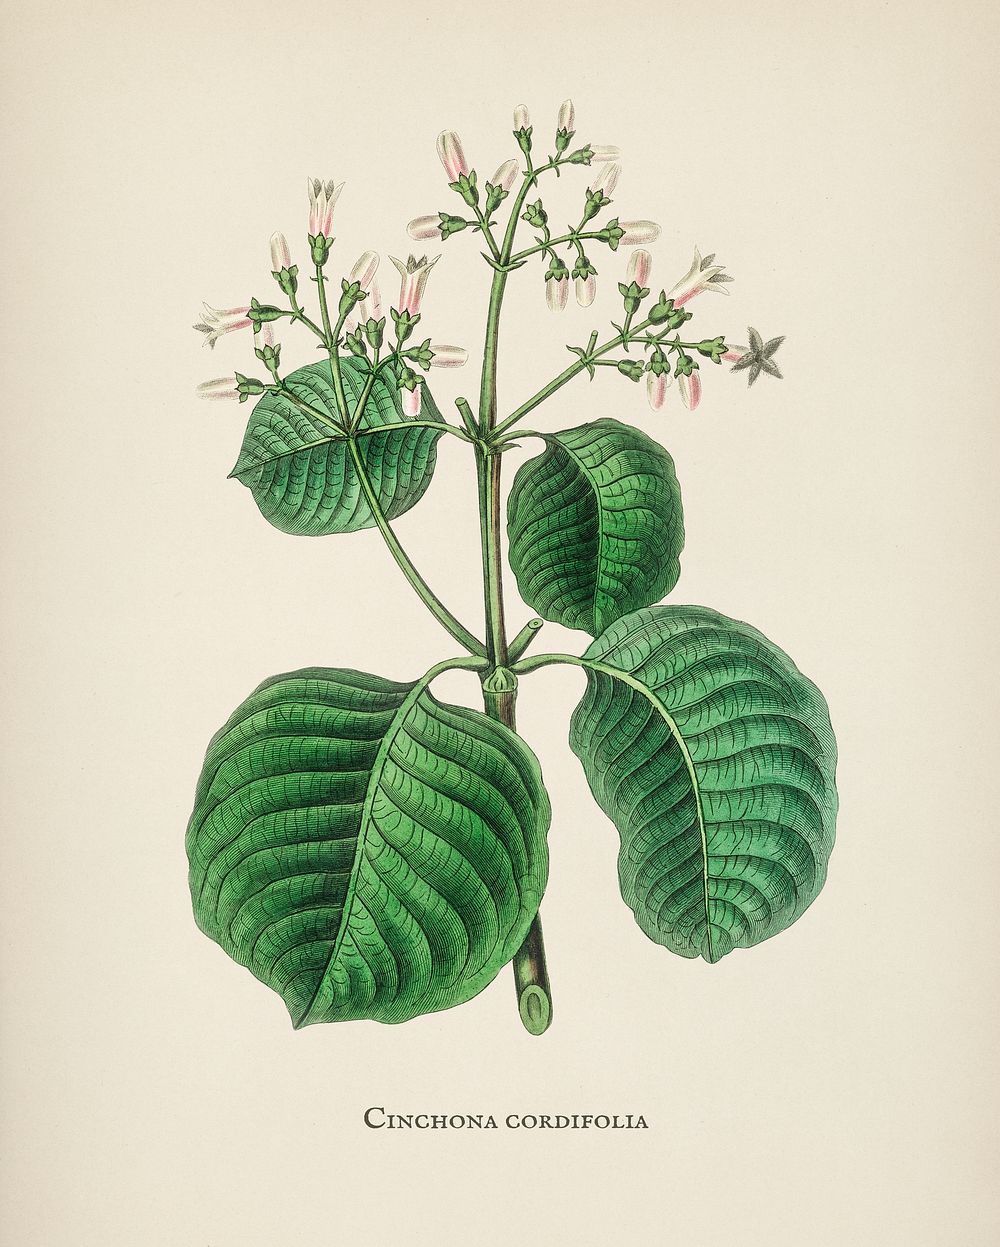 Cartagena bark (cinchona cordifolia) illustration from Medical Botany (1836) by John Stephenson and James Morss Churchill.